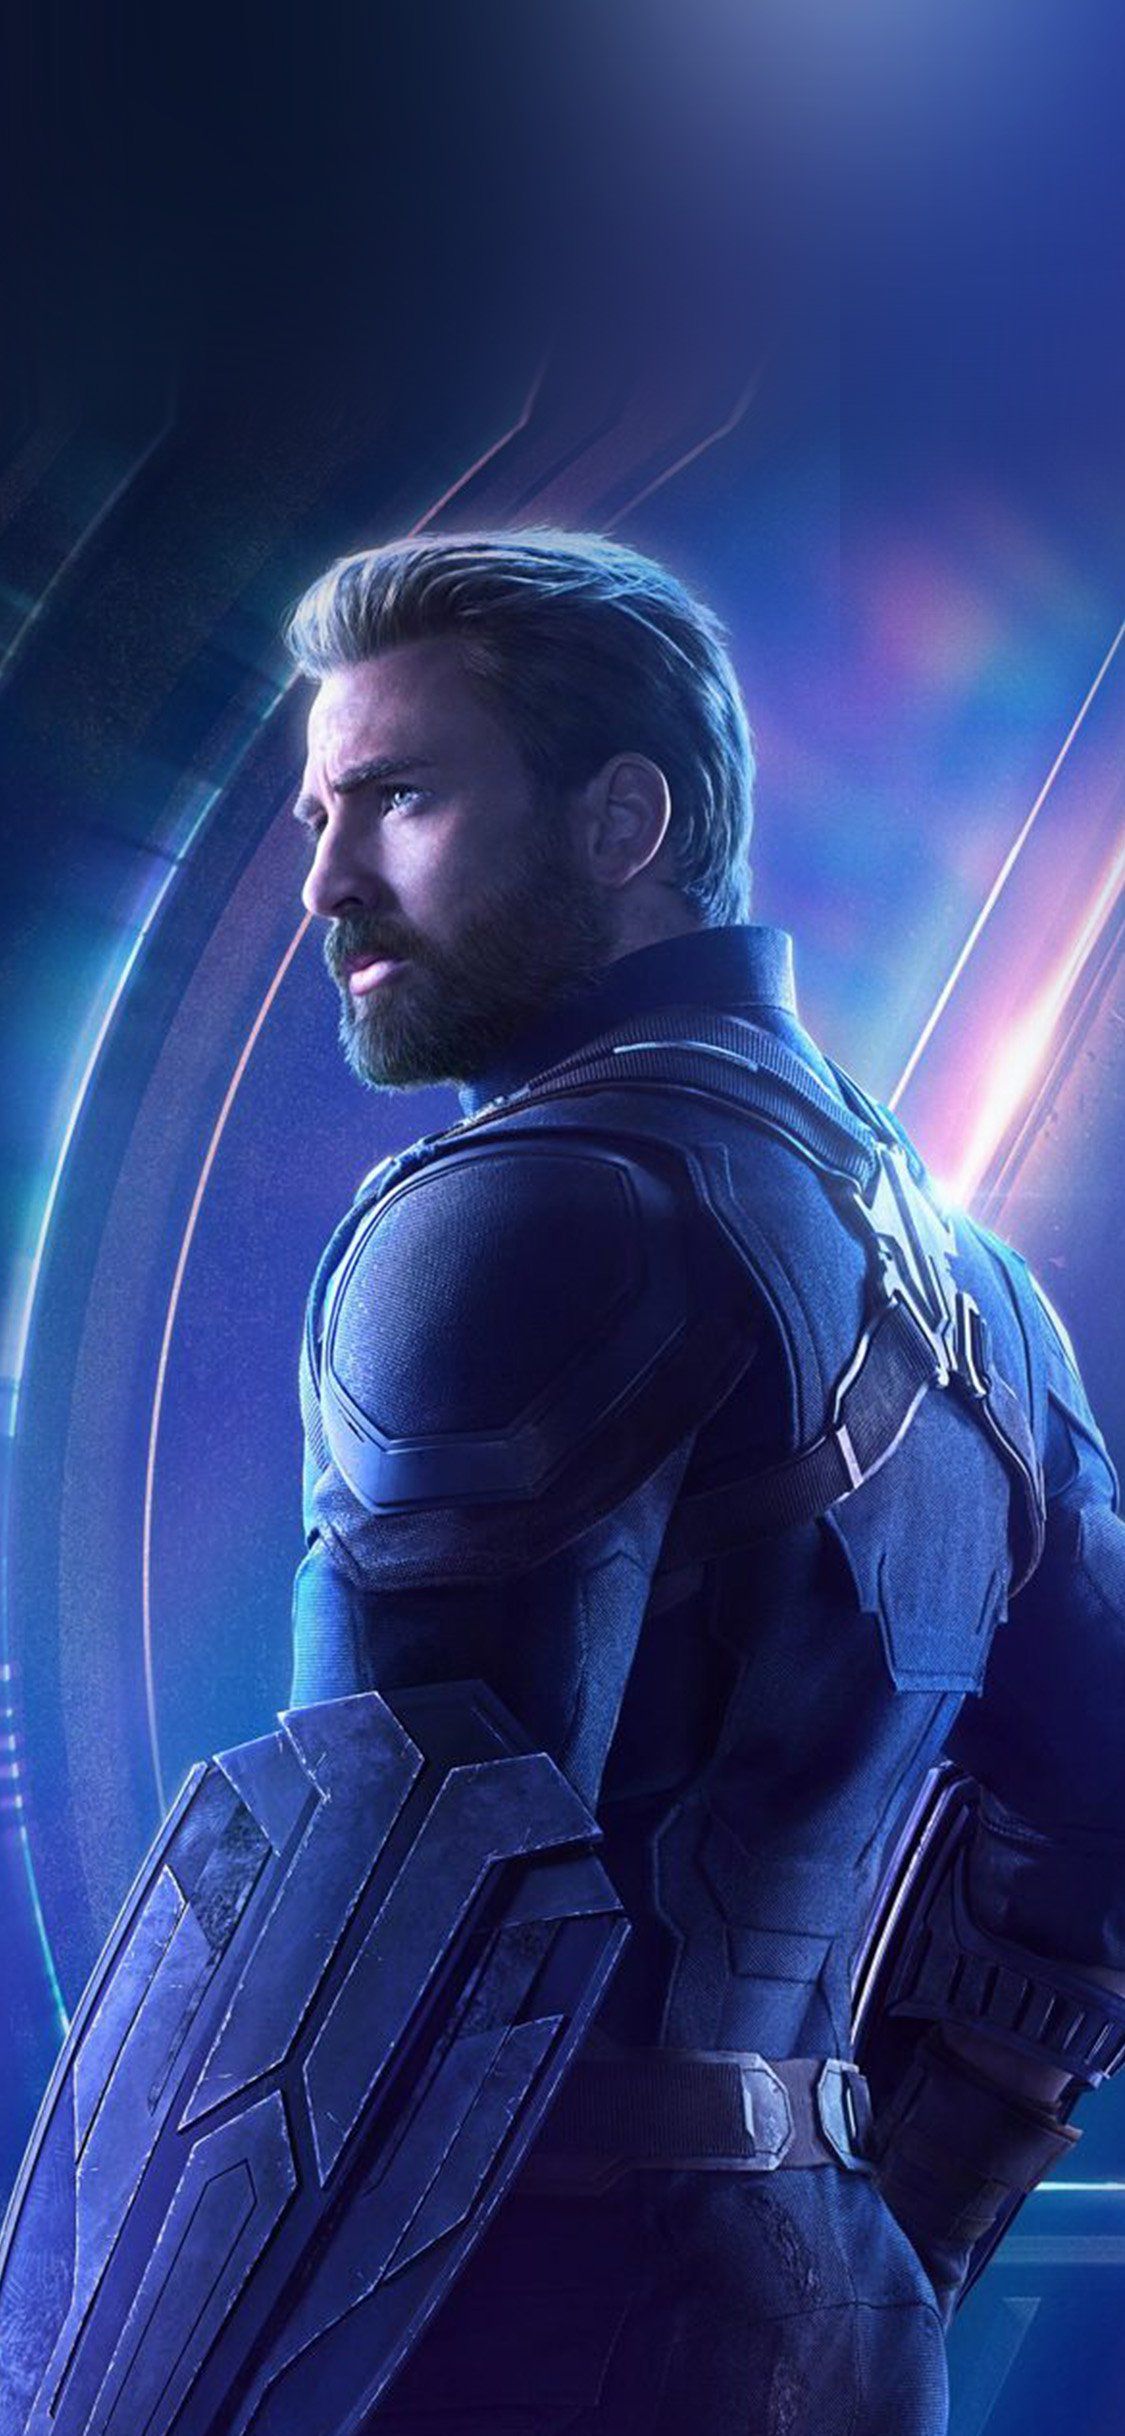 Captain america avengers hero chris evans iPhone X Wallpaper Free